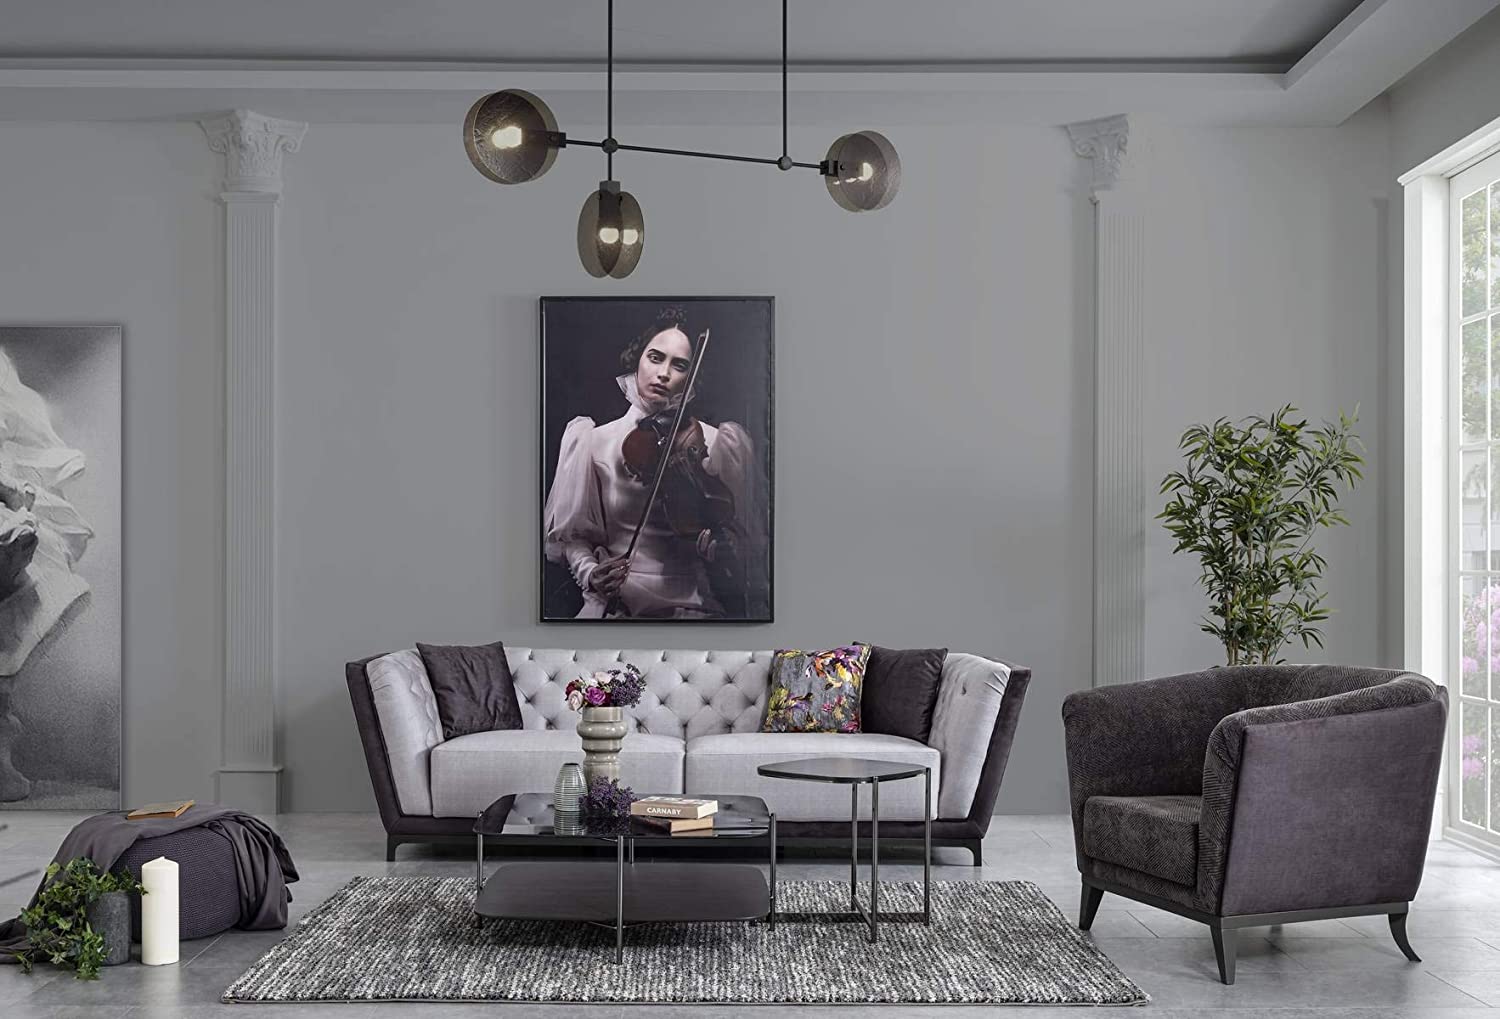 Designer Sofa Set:- Maverick 2+2+1 Suede Fabric 5 Seater Sofa Set Luxury Furniture (Light & Dark Grey)